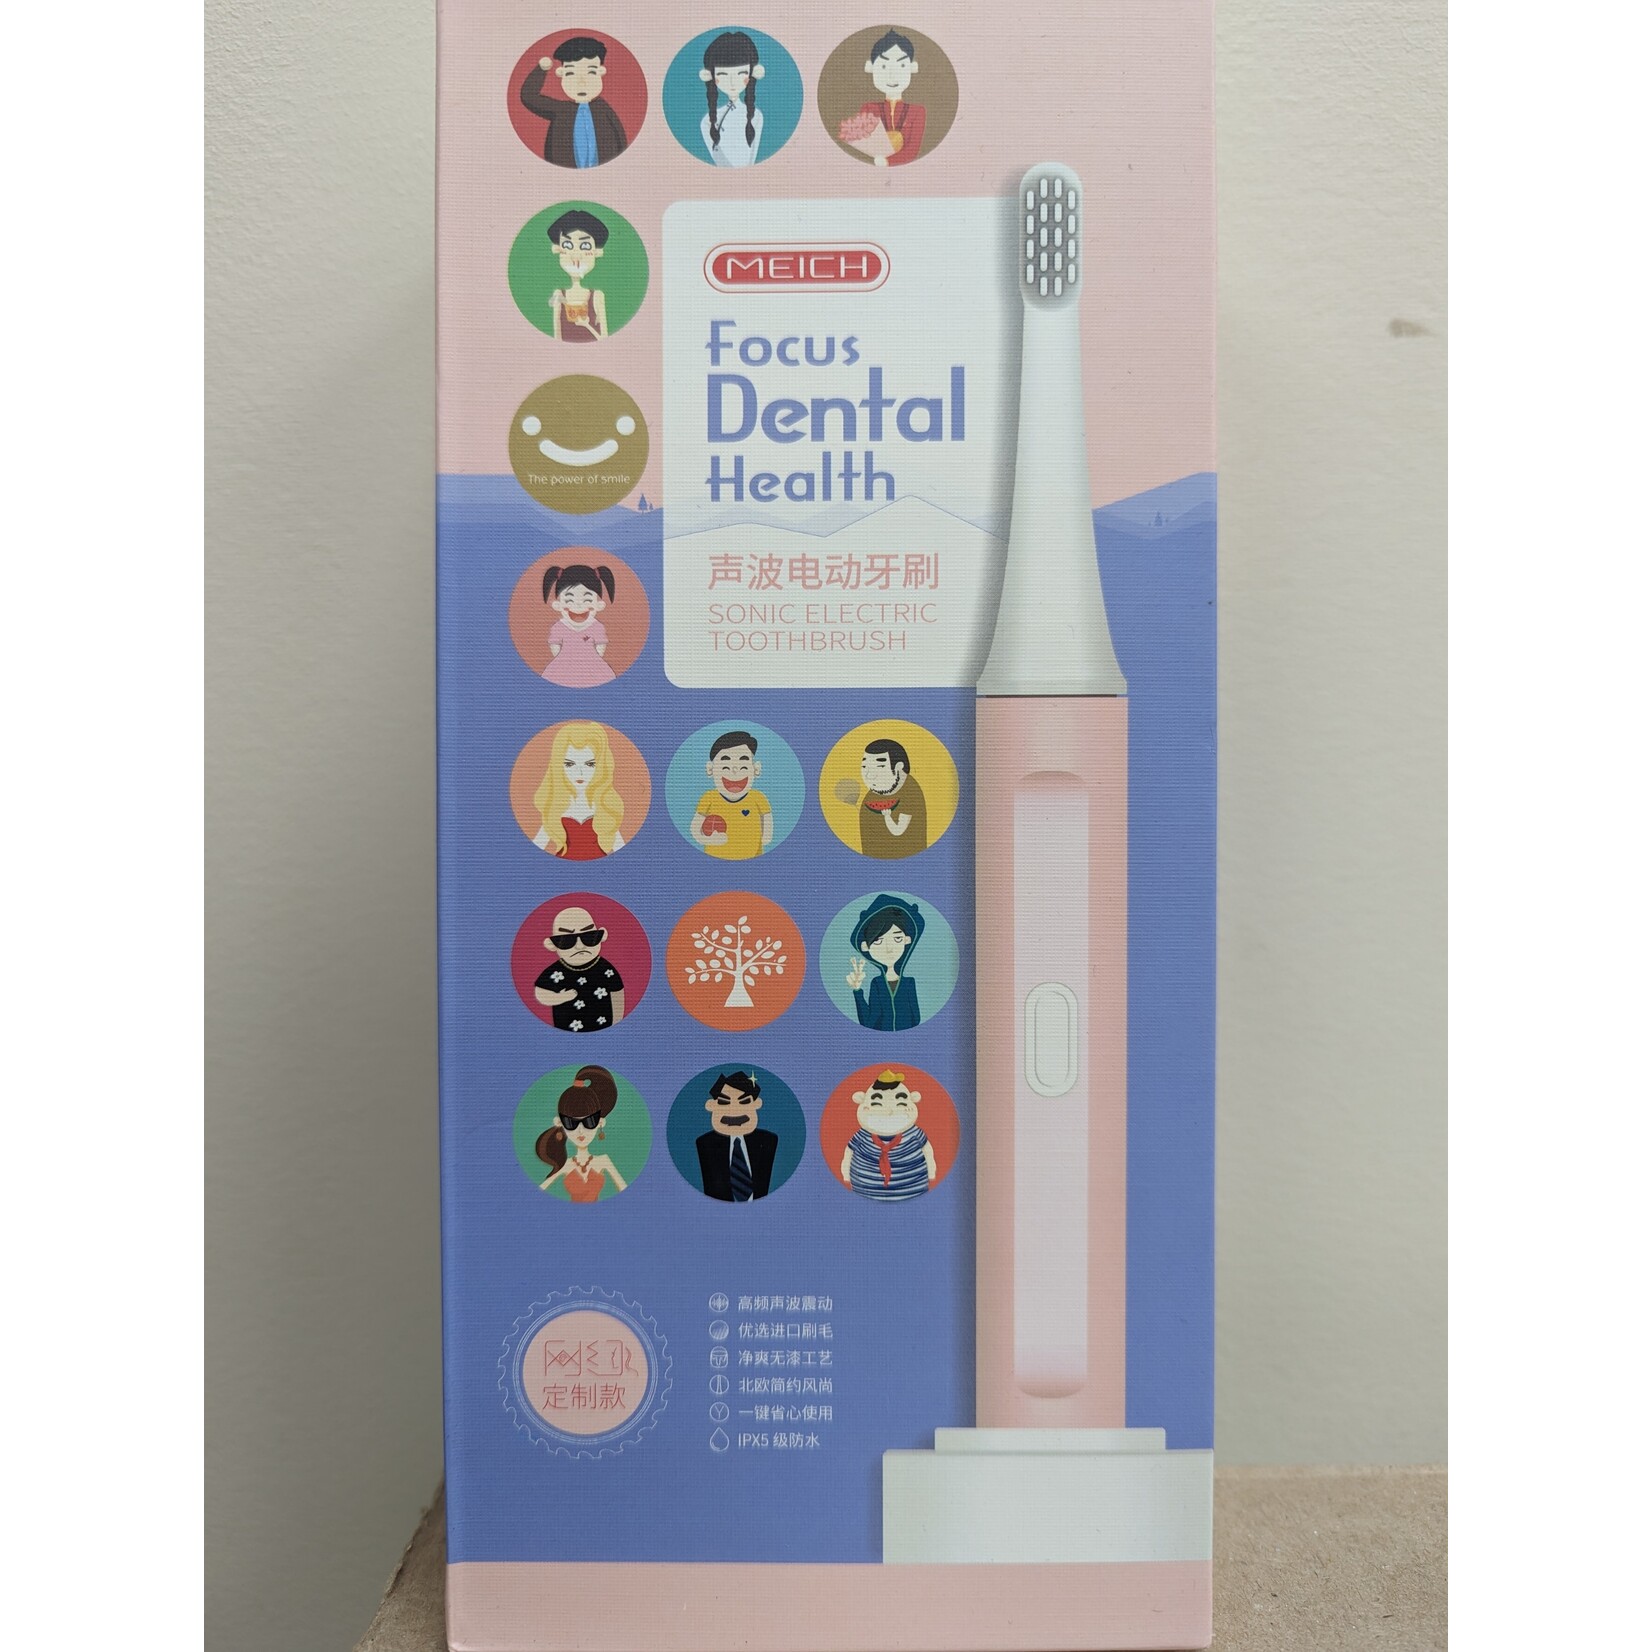 Focus Dental Health Sonic Electric Toothbrush